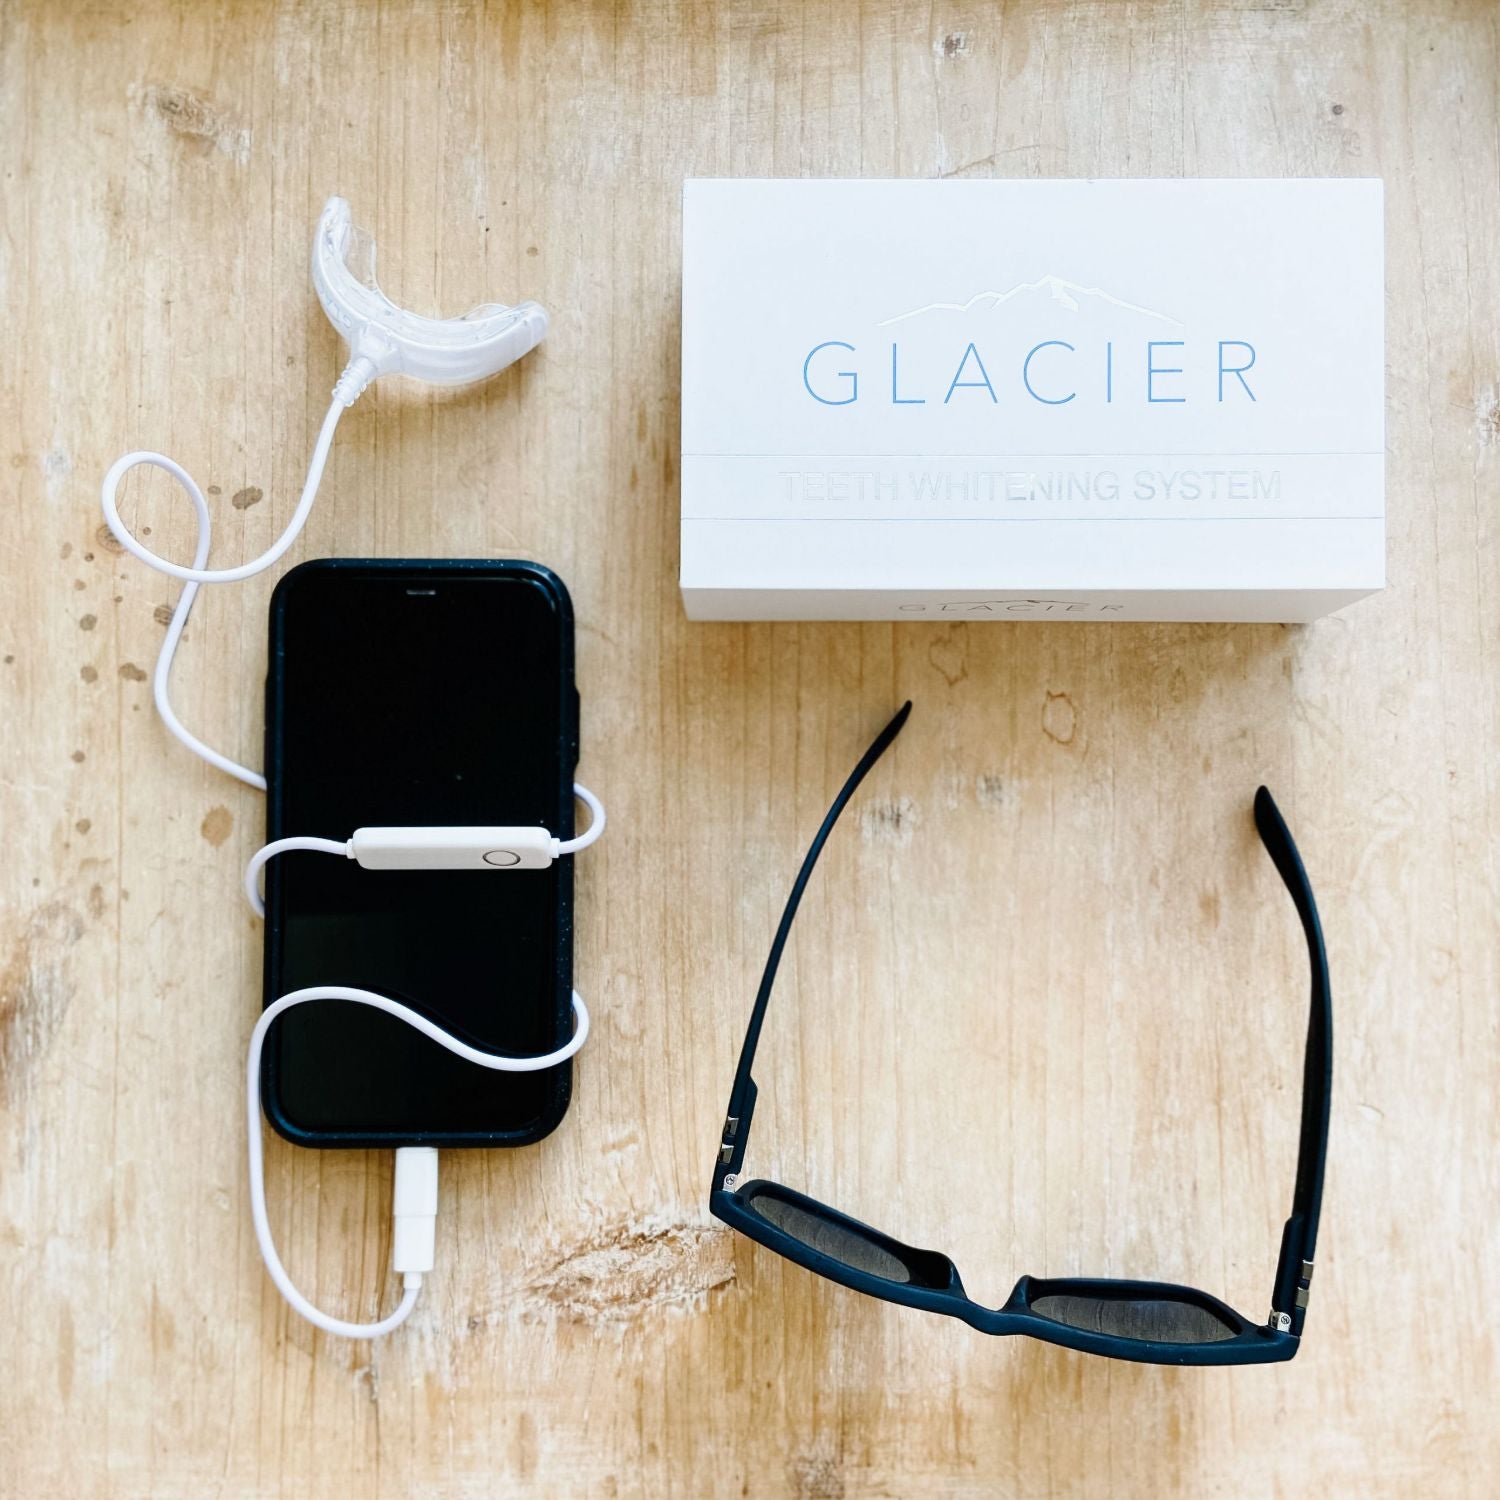 Glacier Whitening LED Mouthpiece